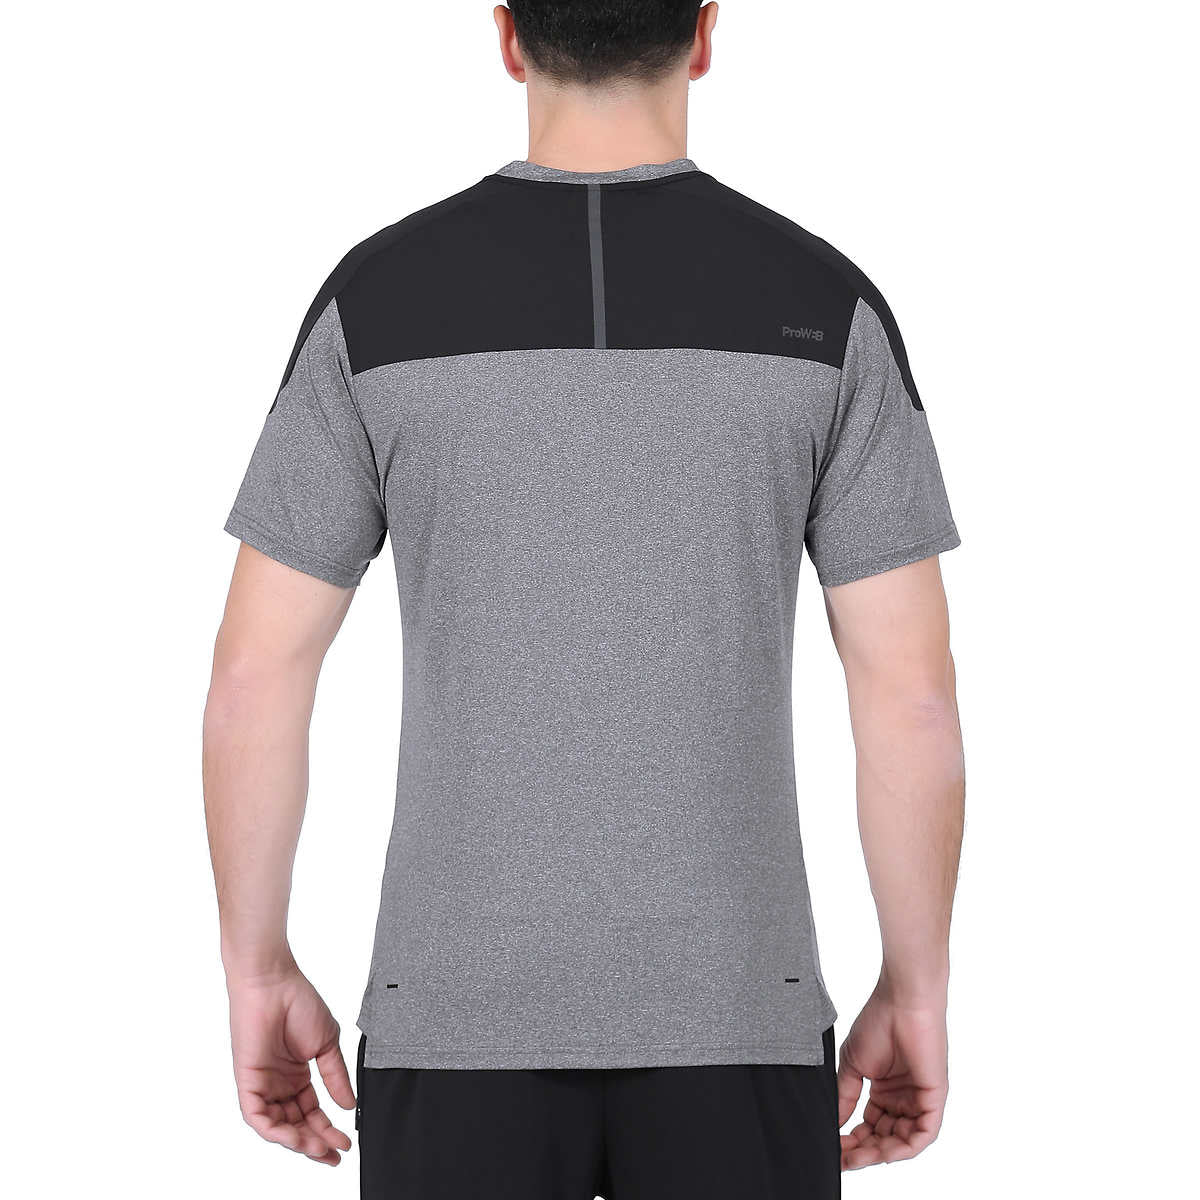 Spyder T Shirt Mens Sz S Gray Short Sleeve V-Neck Active Athletic Gym Wear